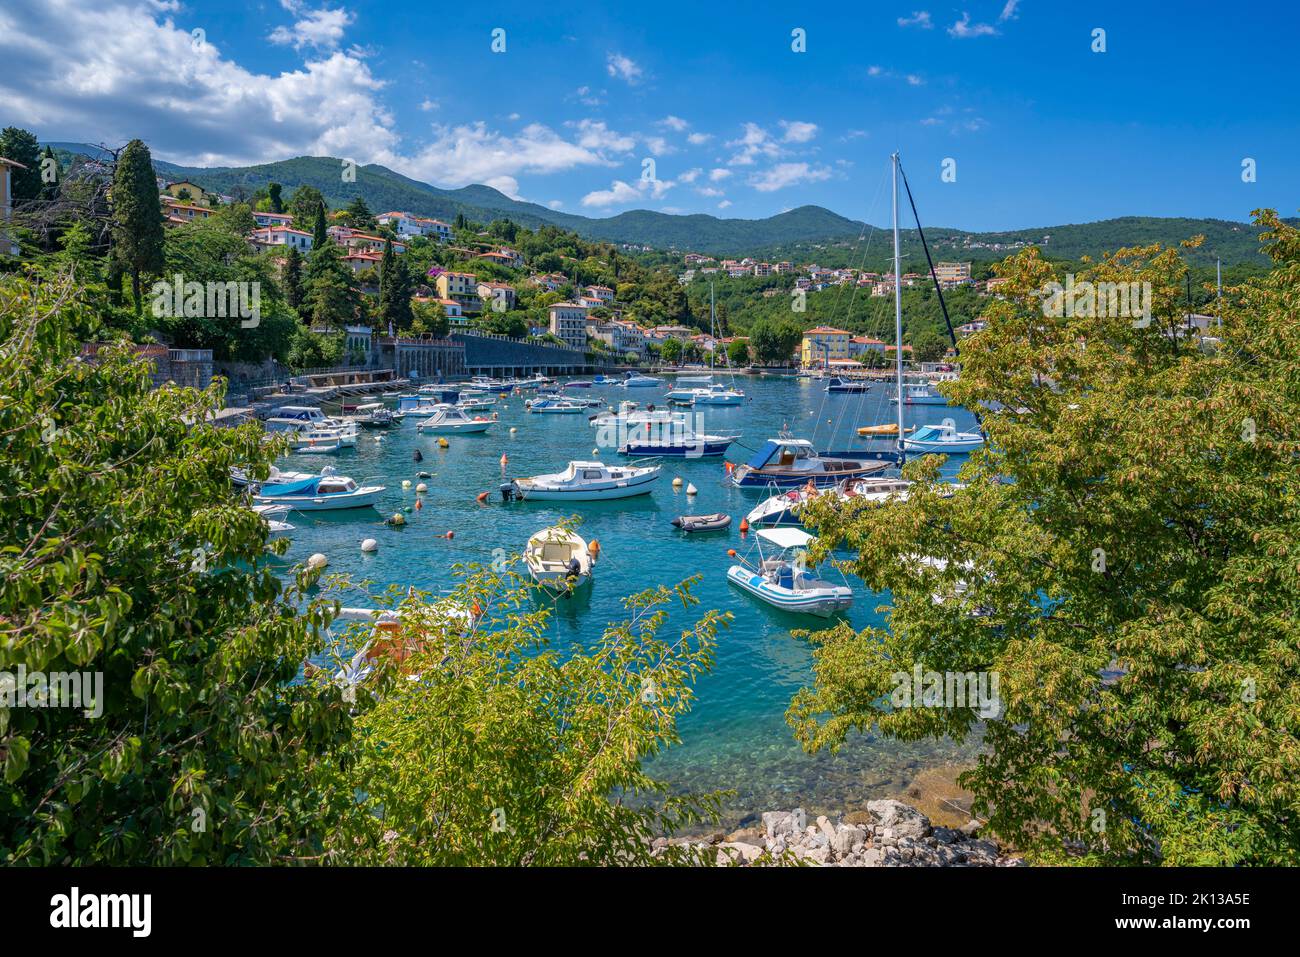 View of boats in the harbour at Ika, Ika, Kvarner Bay, Eastern Istria, Croatia, Europe Stock Photo